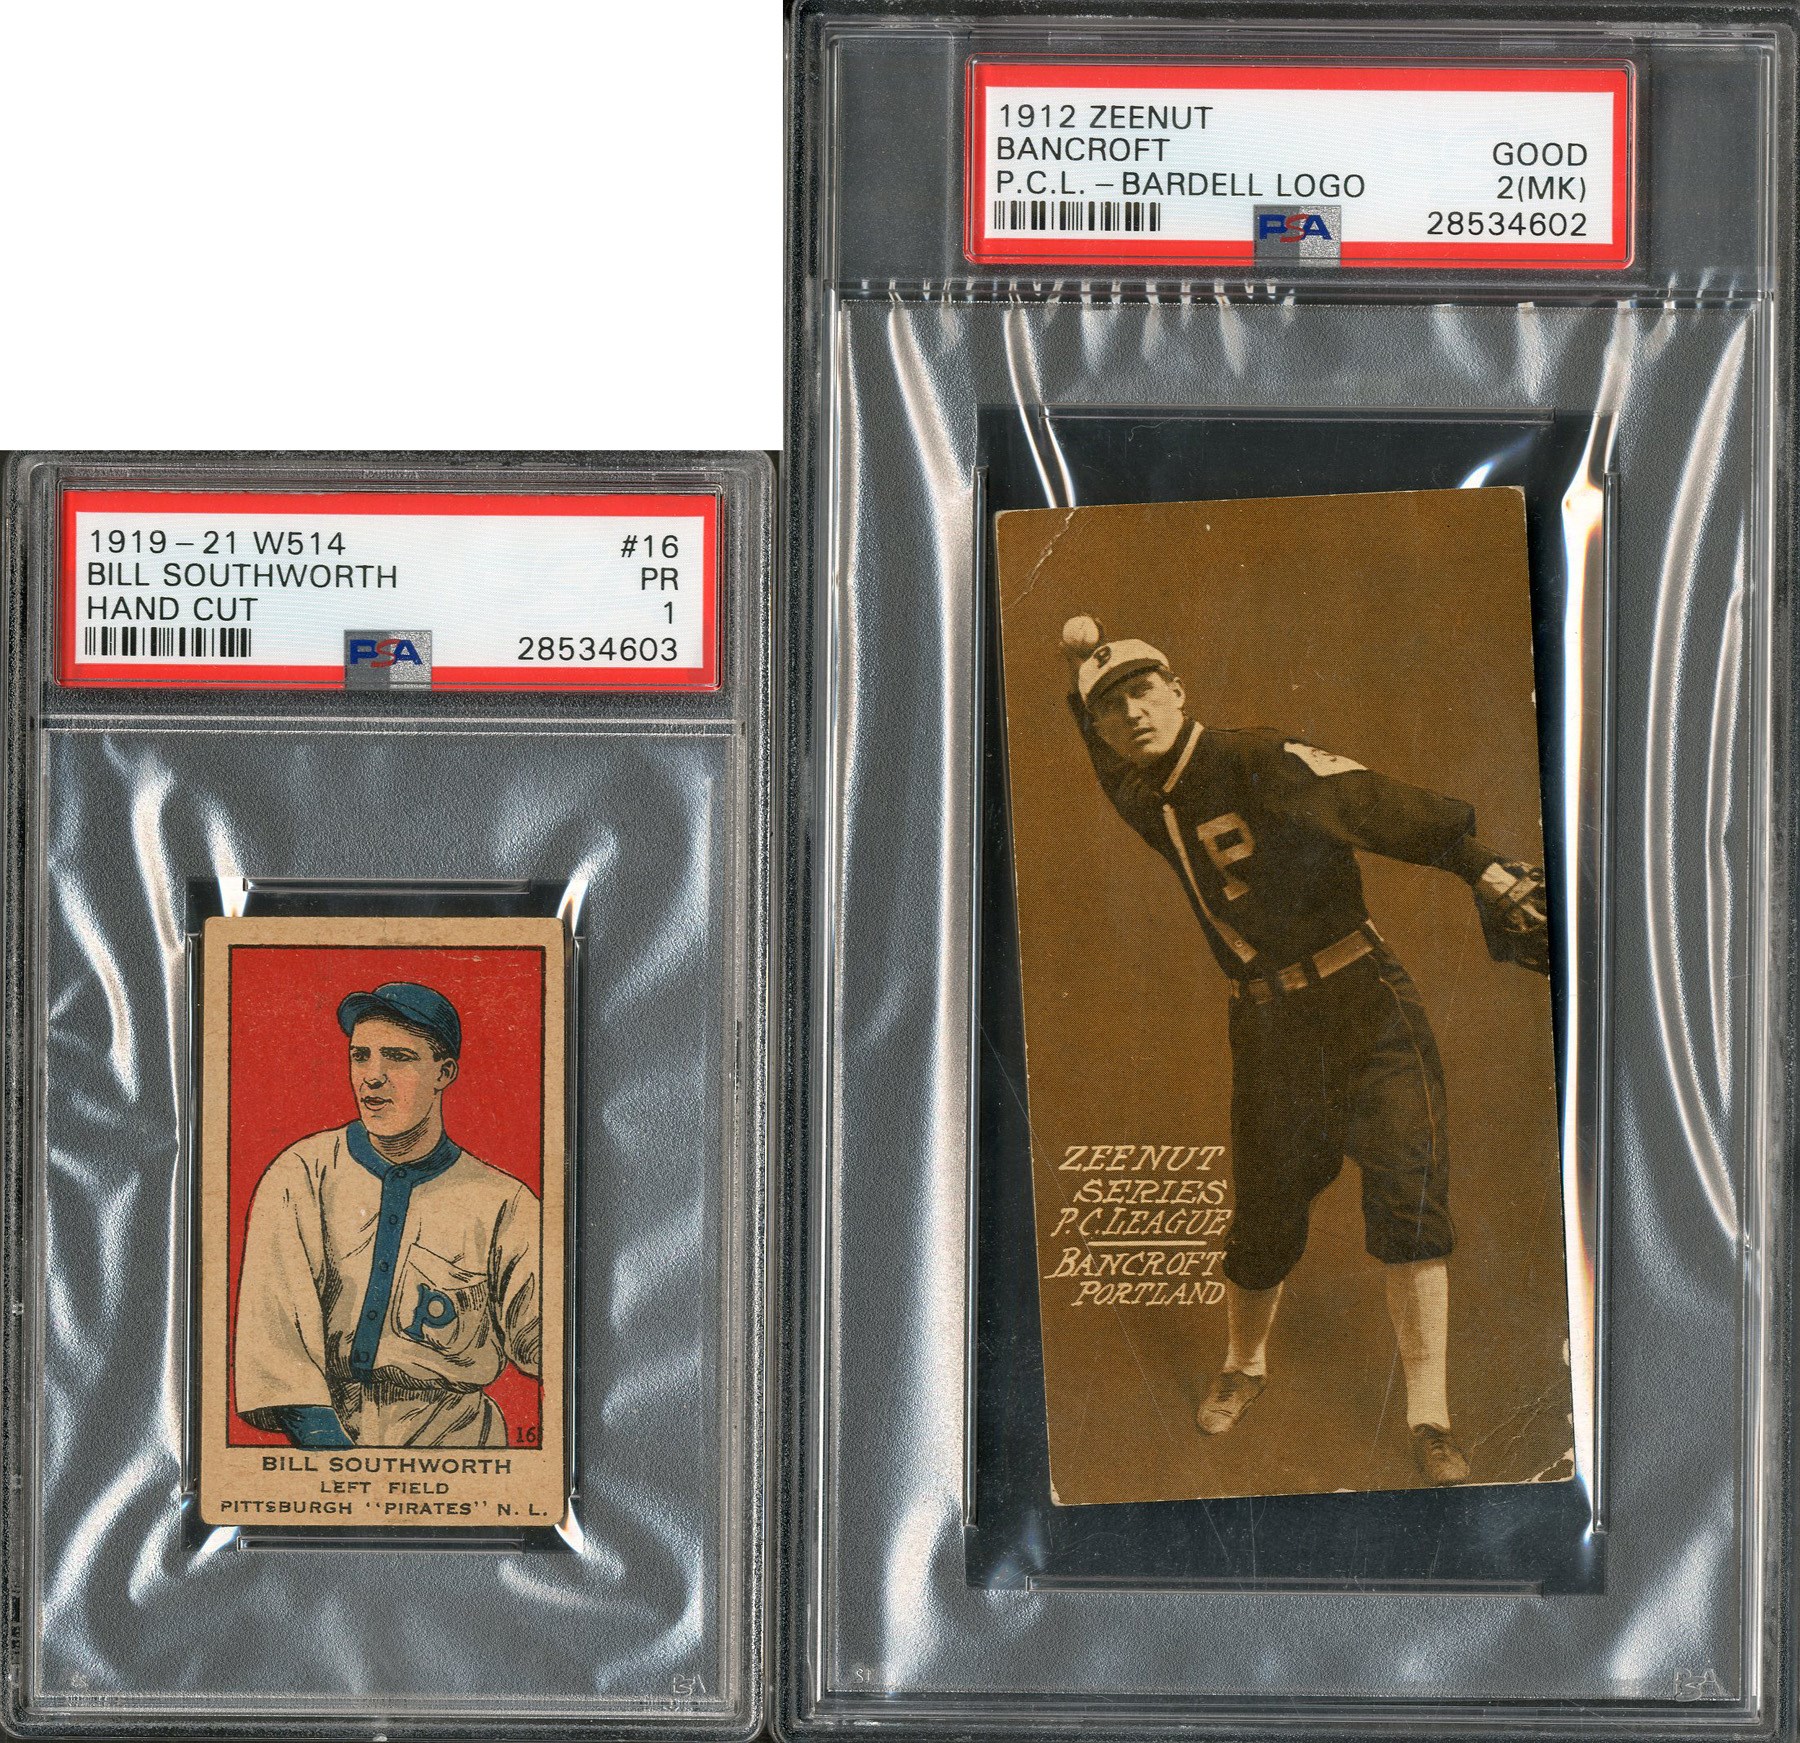 Baseball and Trading Cards - 1912 Zeenut Dave Bancroft Rookie & 1919 W514 Bill Southworth (PSA Graded)